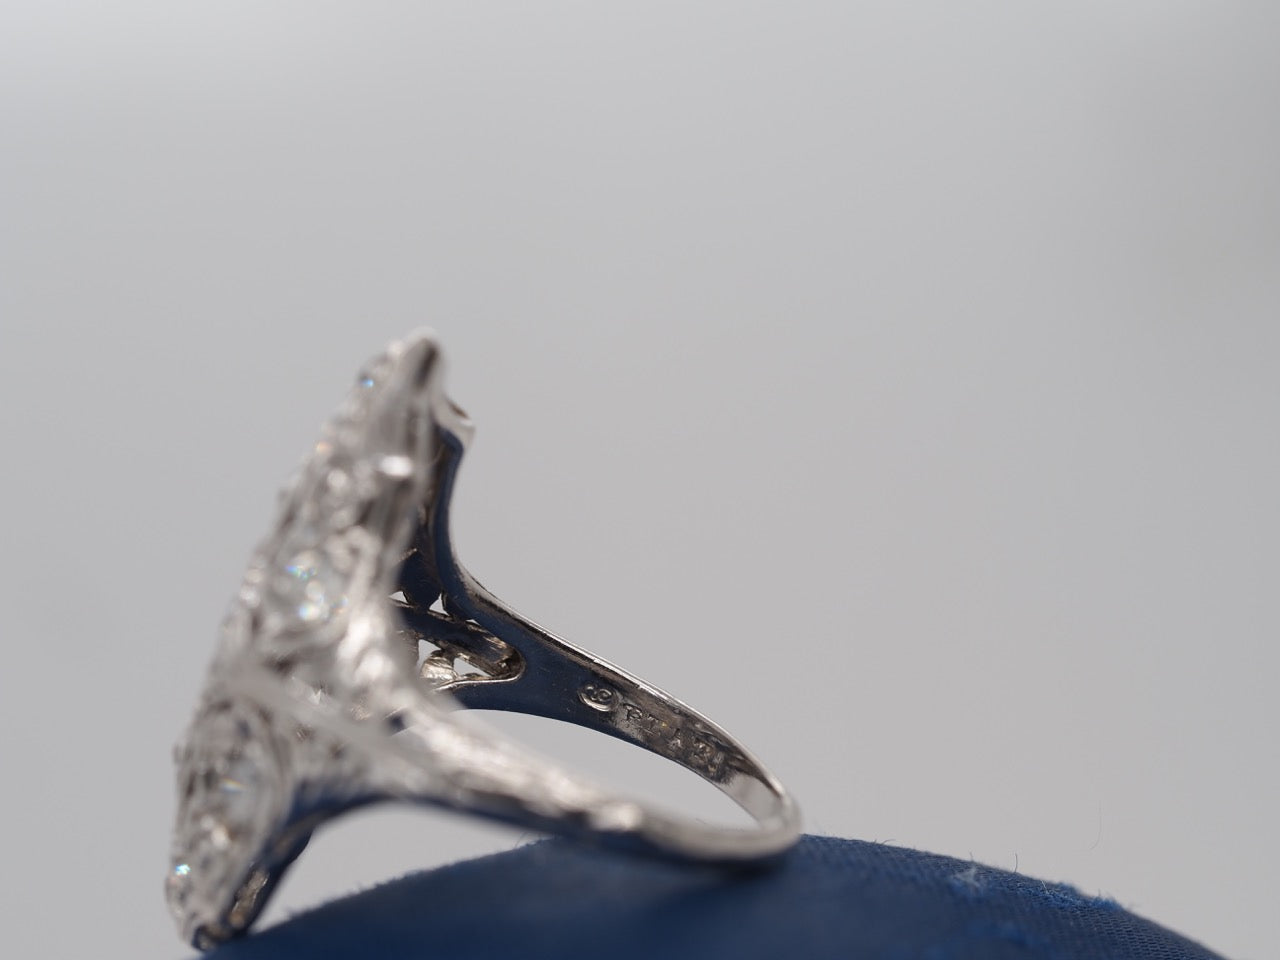 1930s Platinum Art Deco Diamond Shield Ring